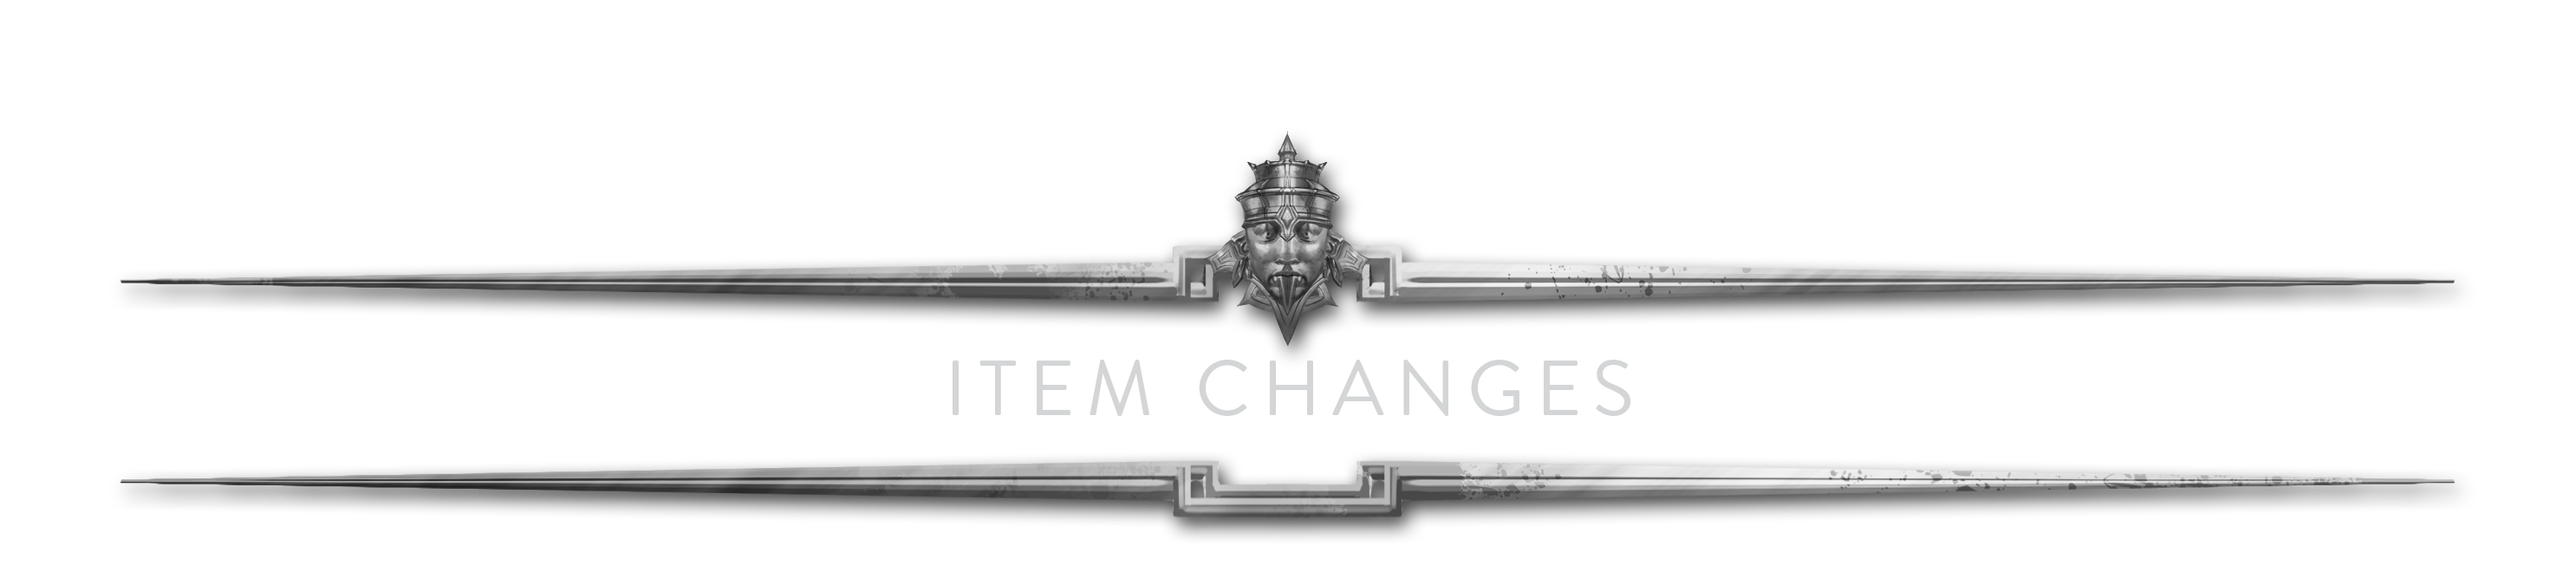 header_item_changes_new1